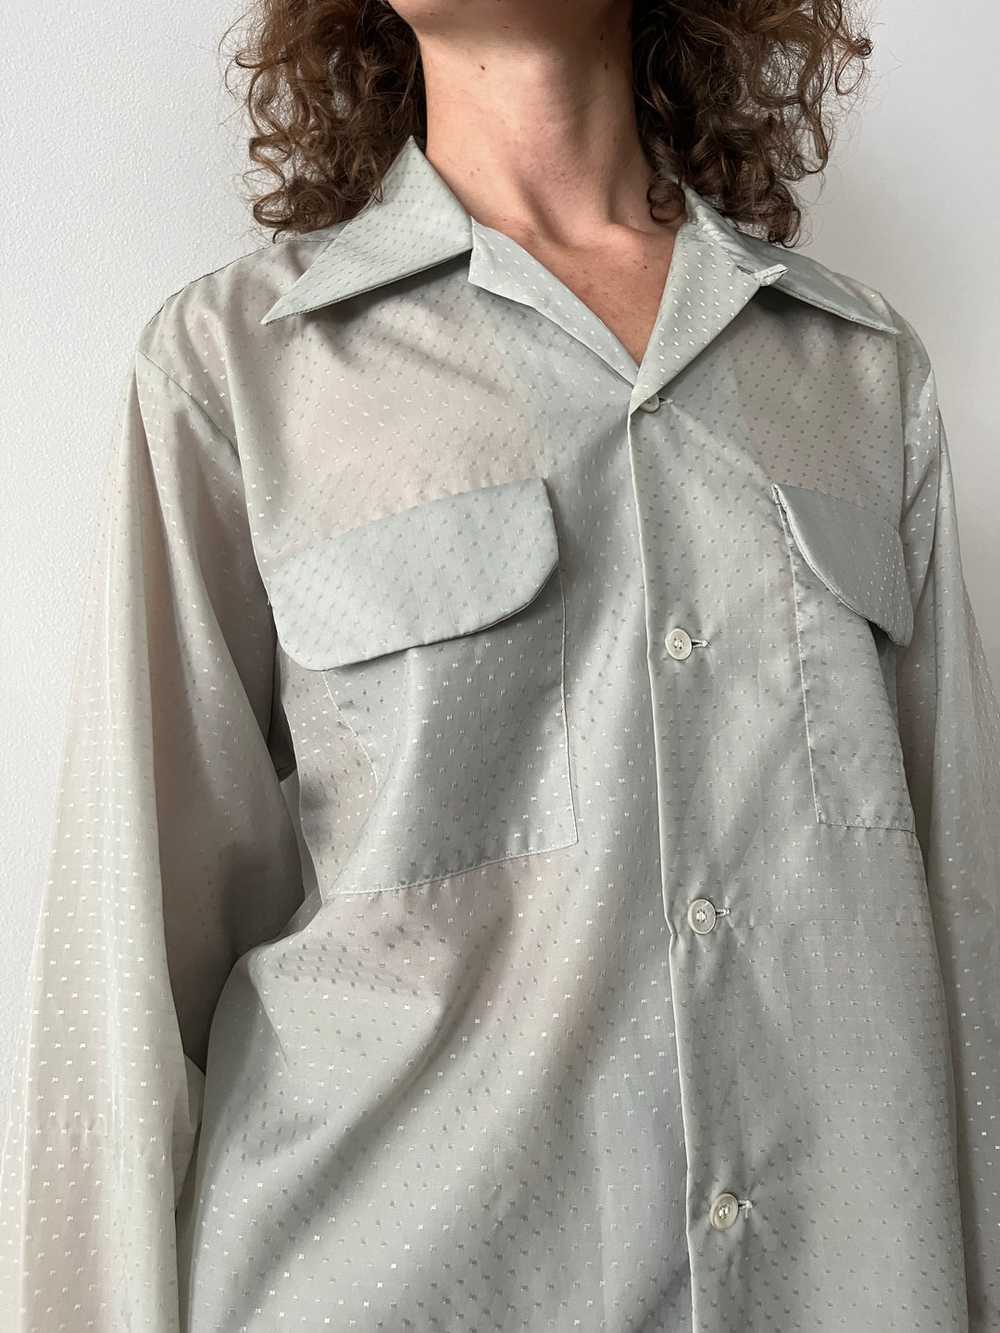 50s BVD Nylon Button Up Shirt - image 2